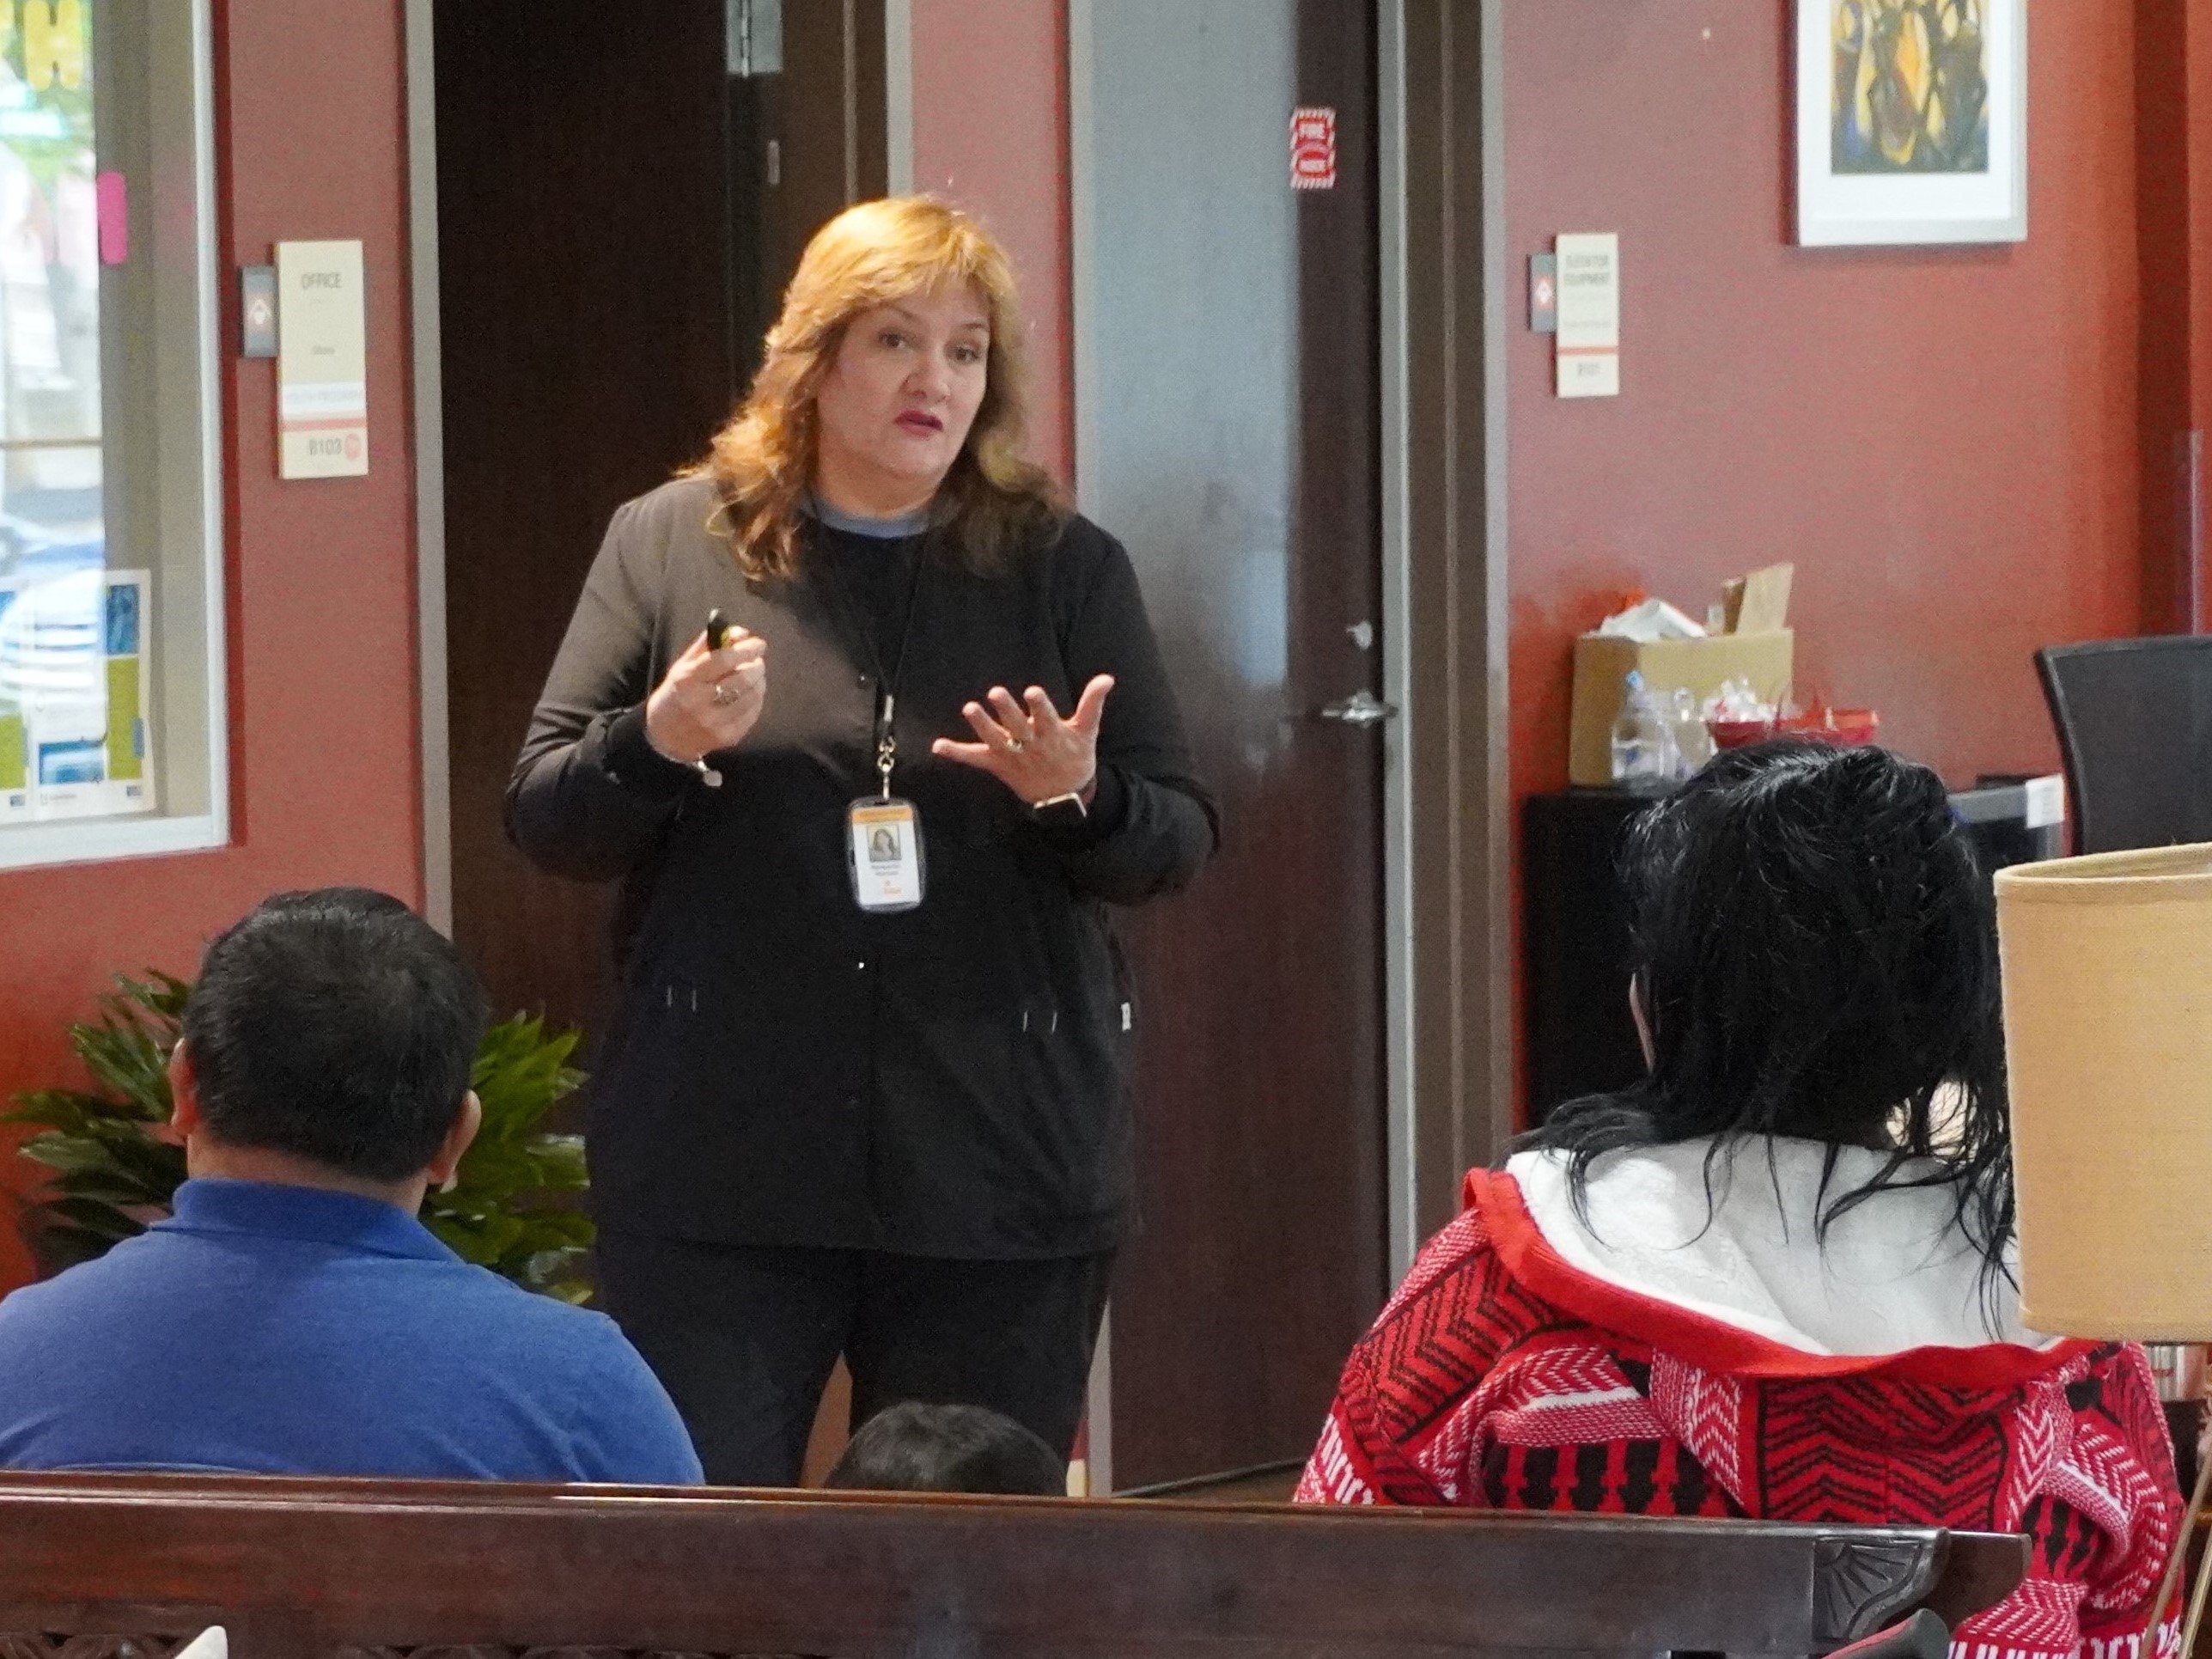 ProSalud Community Health Worker Margarita Marioni delivering a Salud en Mis Manos presentation to a group of people.